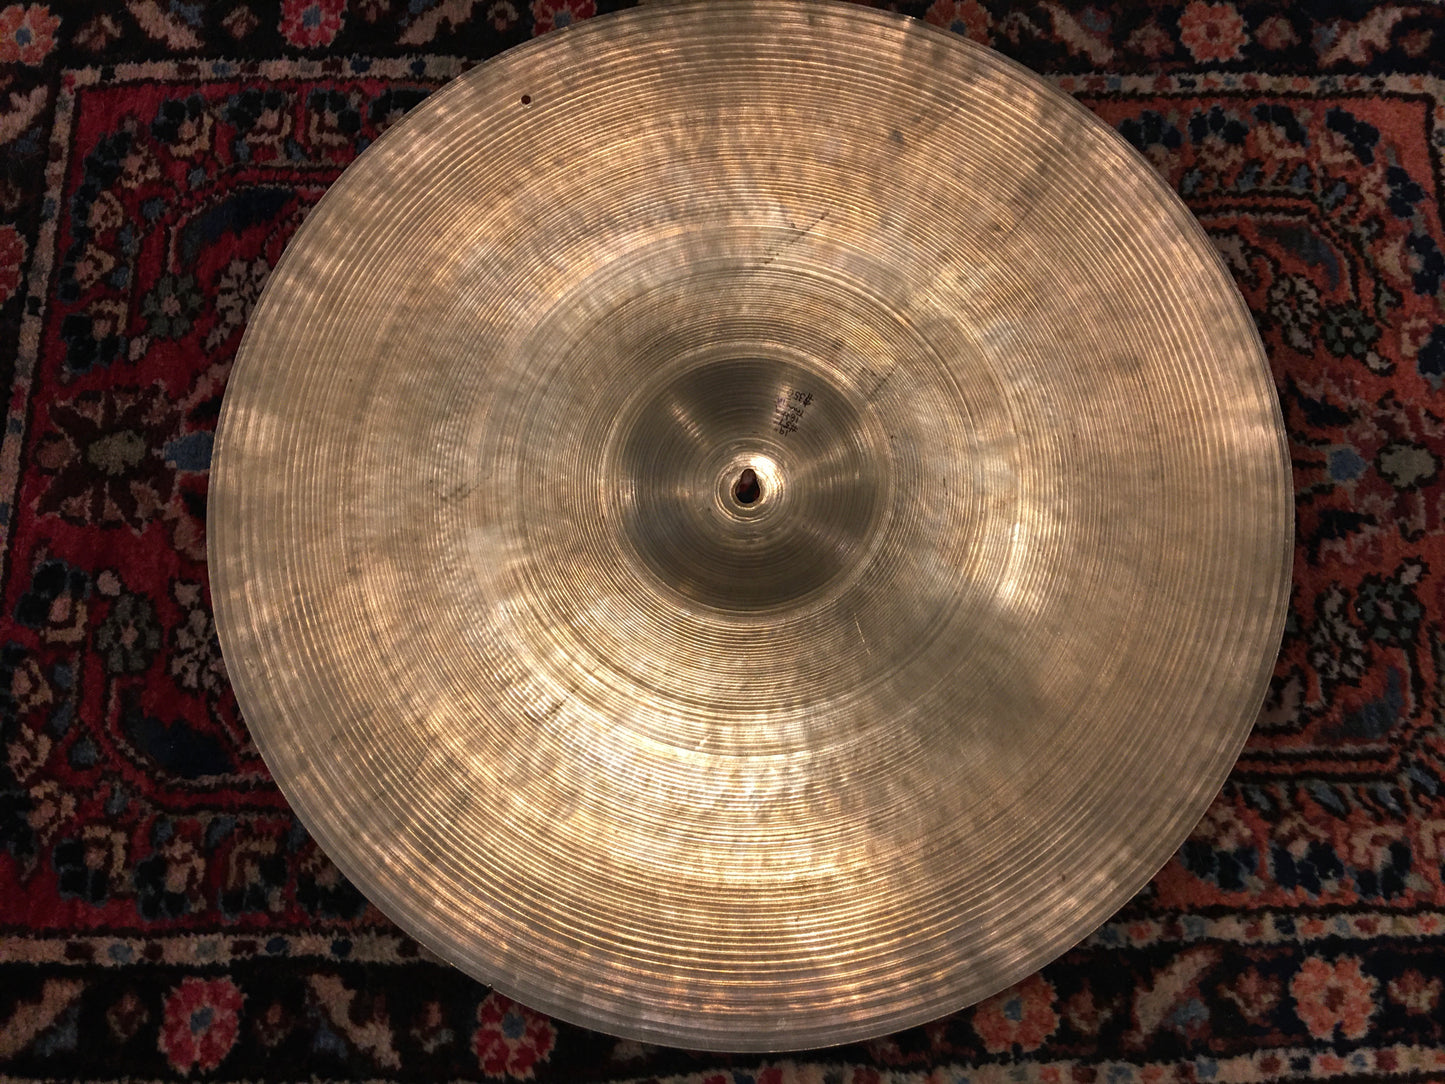 19" Zildjian Trans Stamp Cymbal #577 577